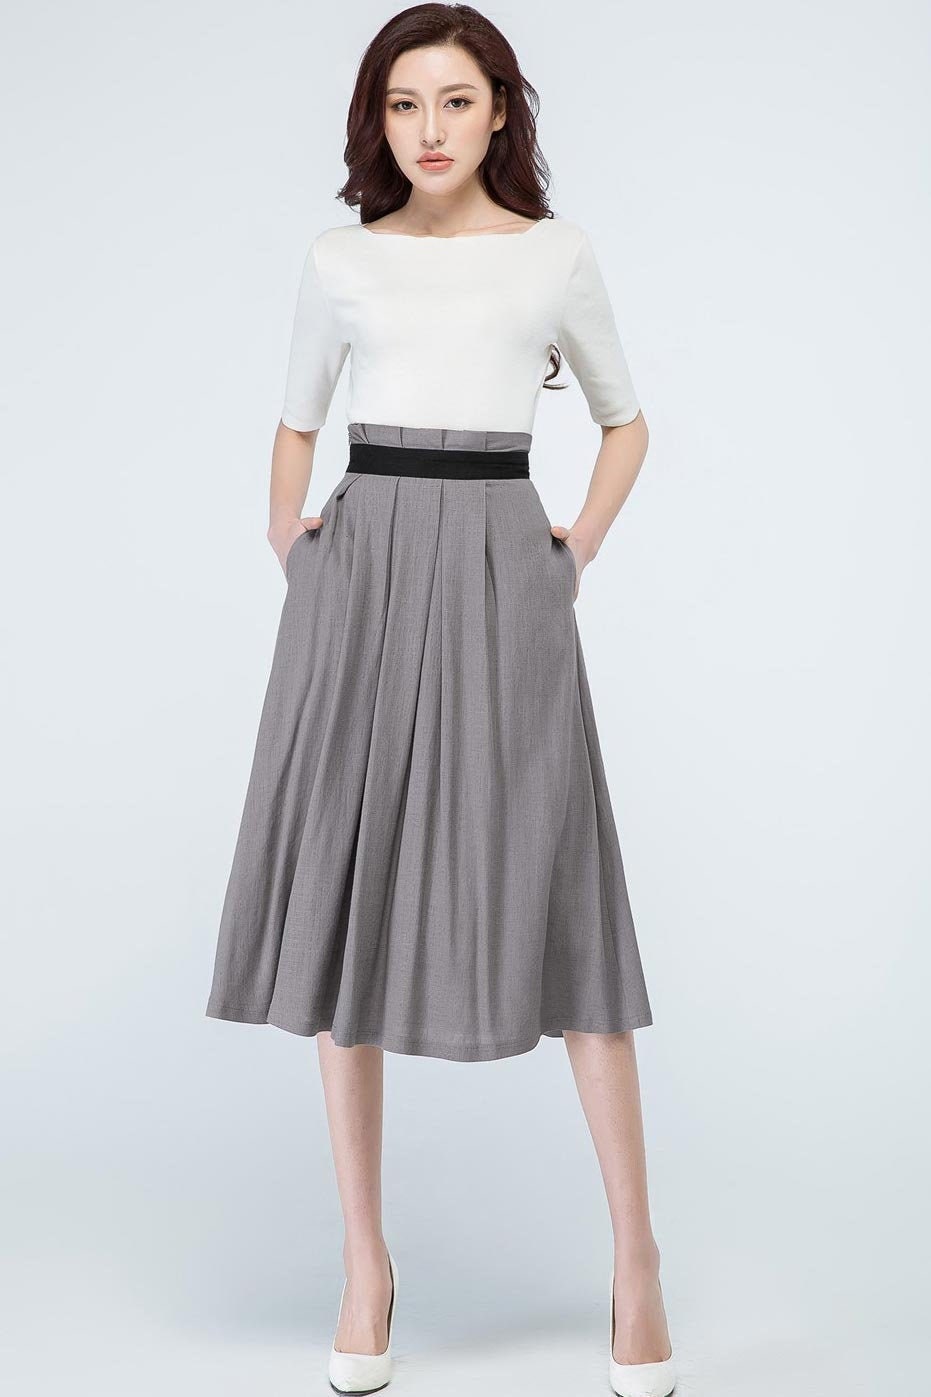 High Waist Pleated Midi Skirt A Line Skirt Flared Skirt | Etsy